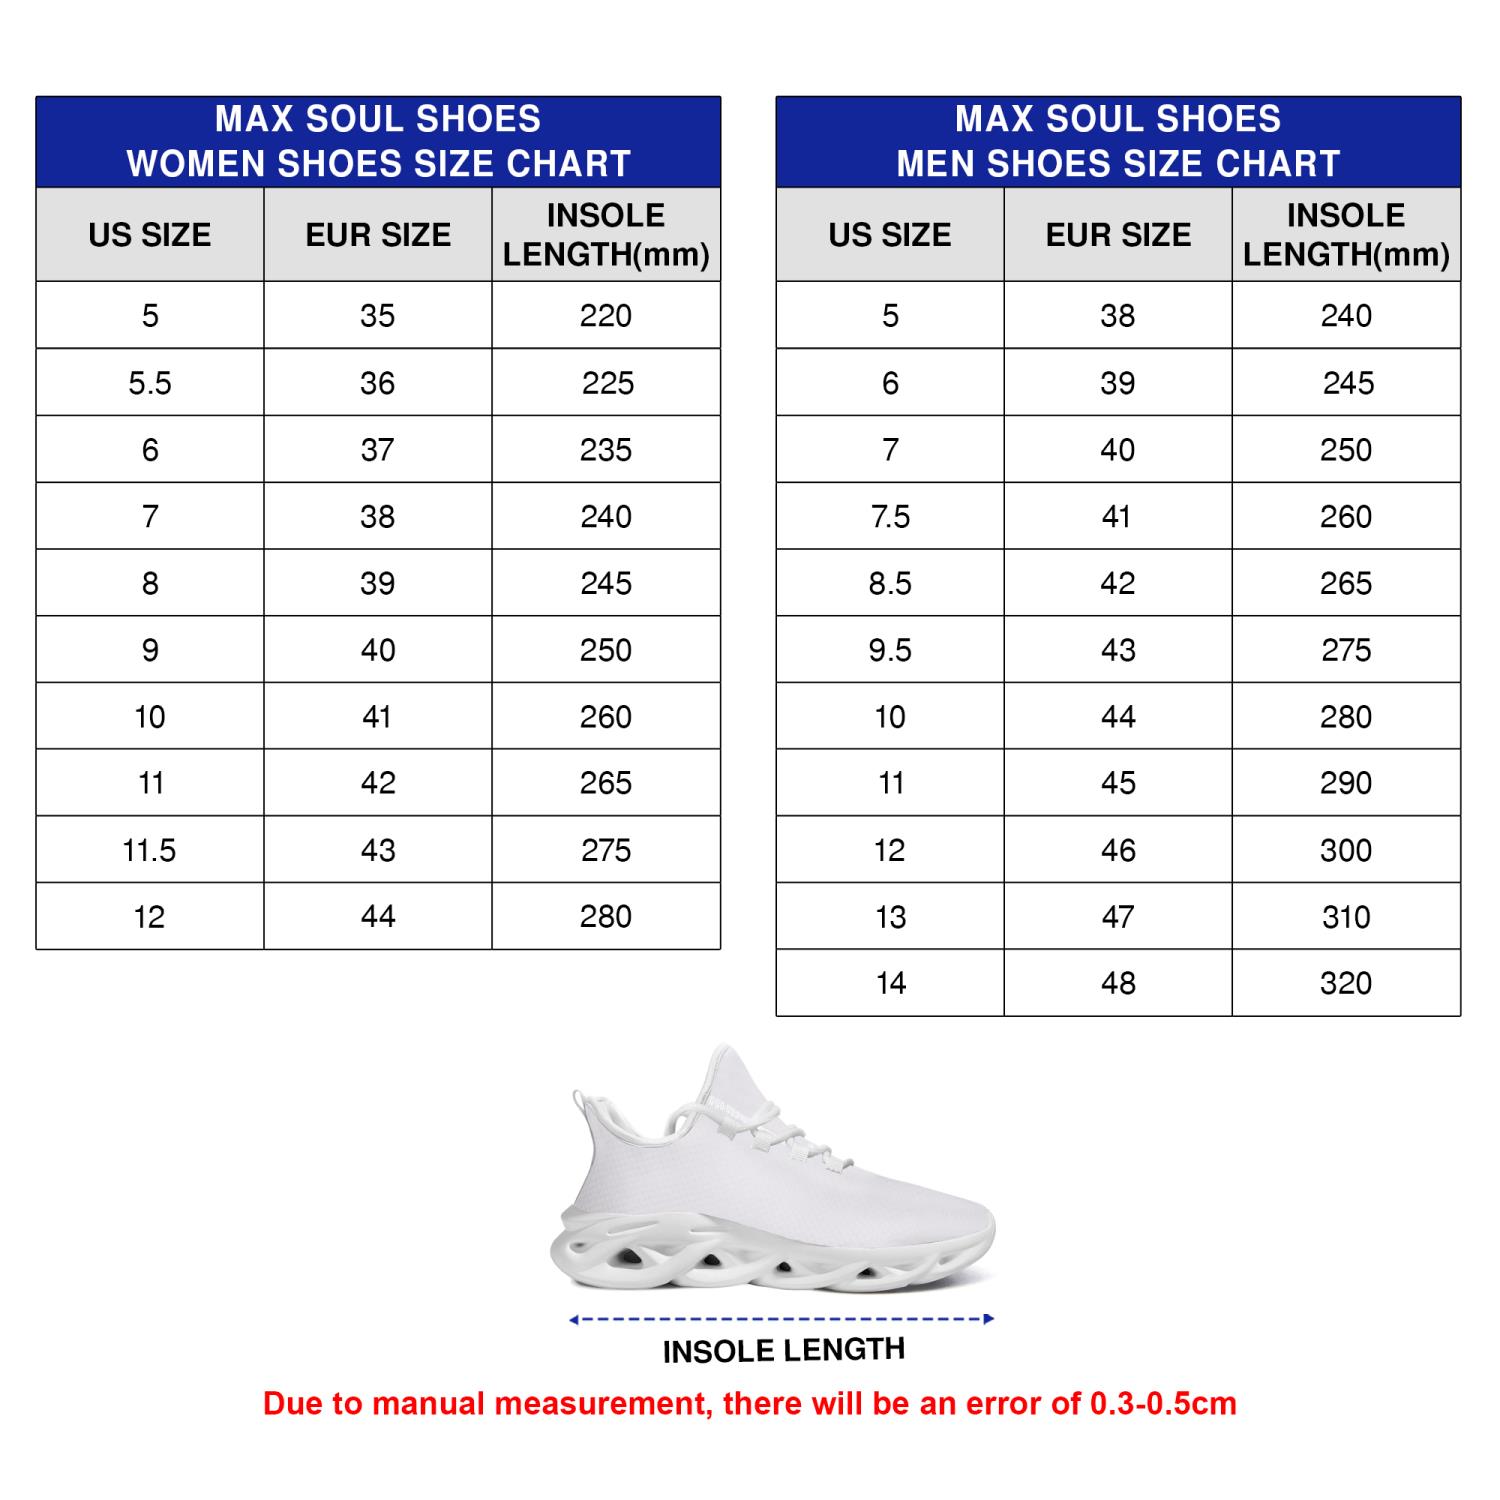 Max Soul Shoes Size Chart